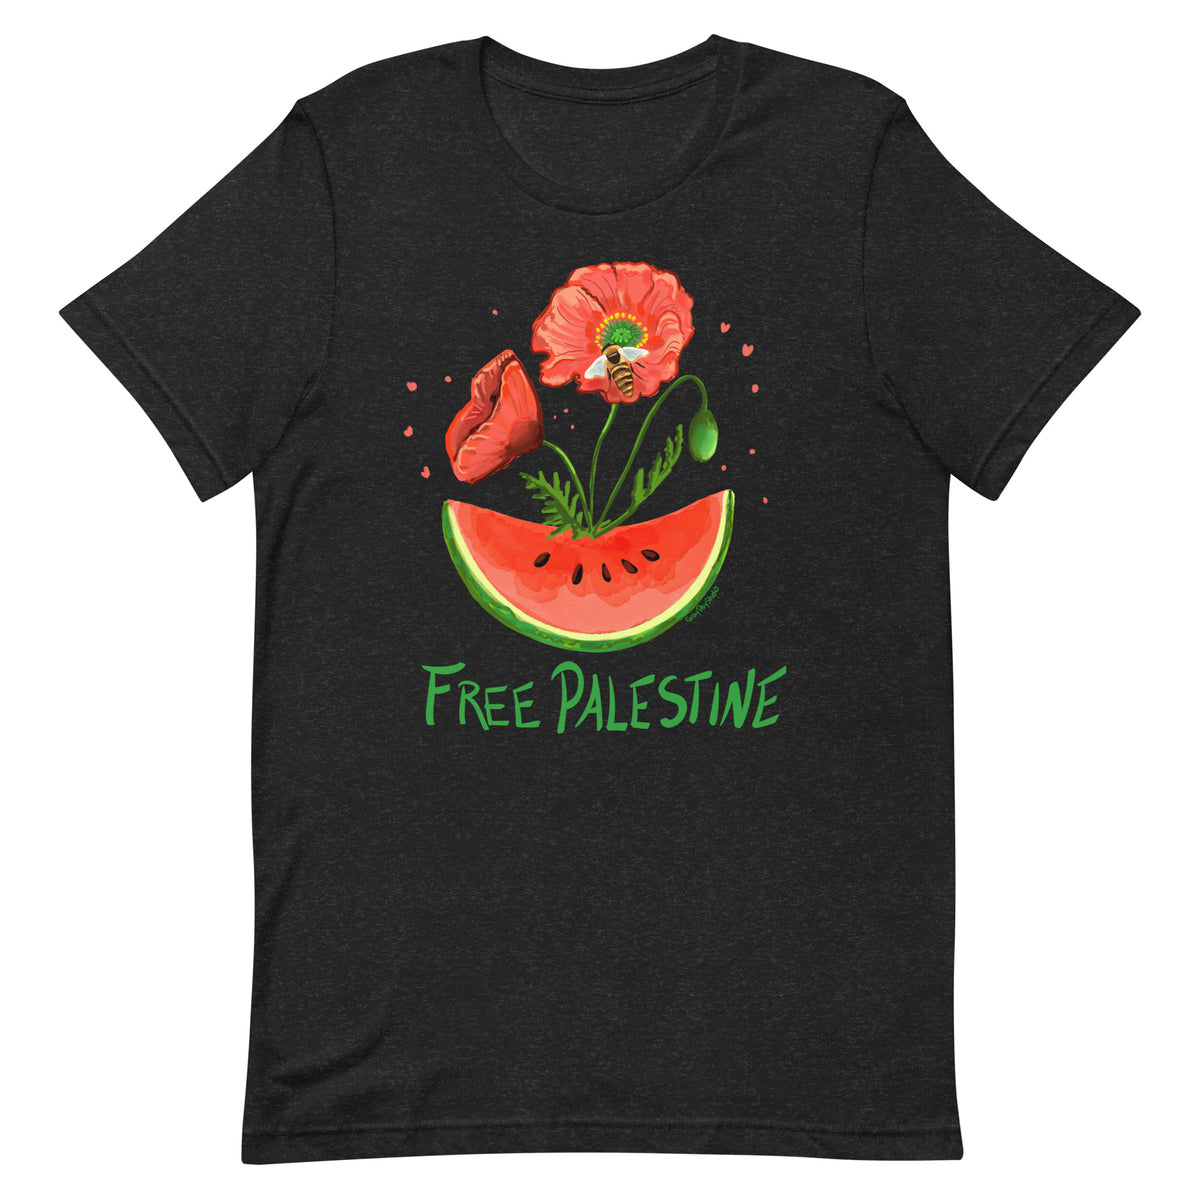 Free Palestine, Watermelon and Poppy T-Shirt